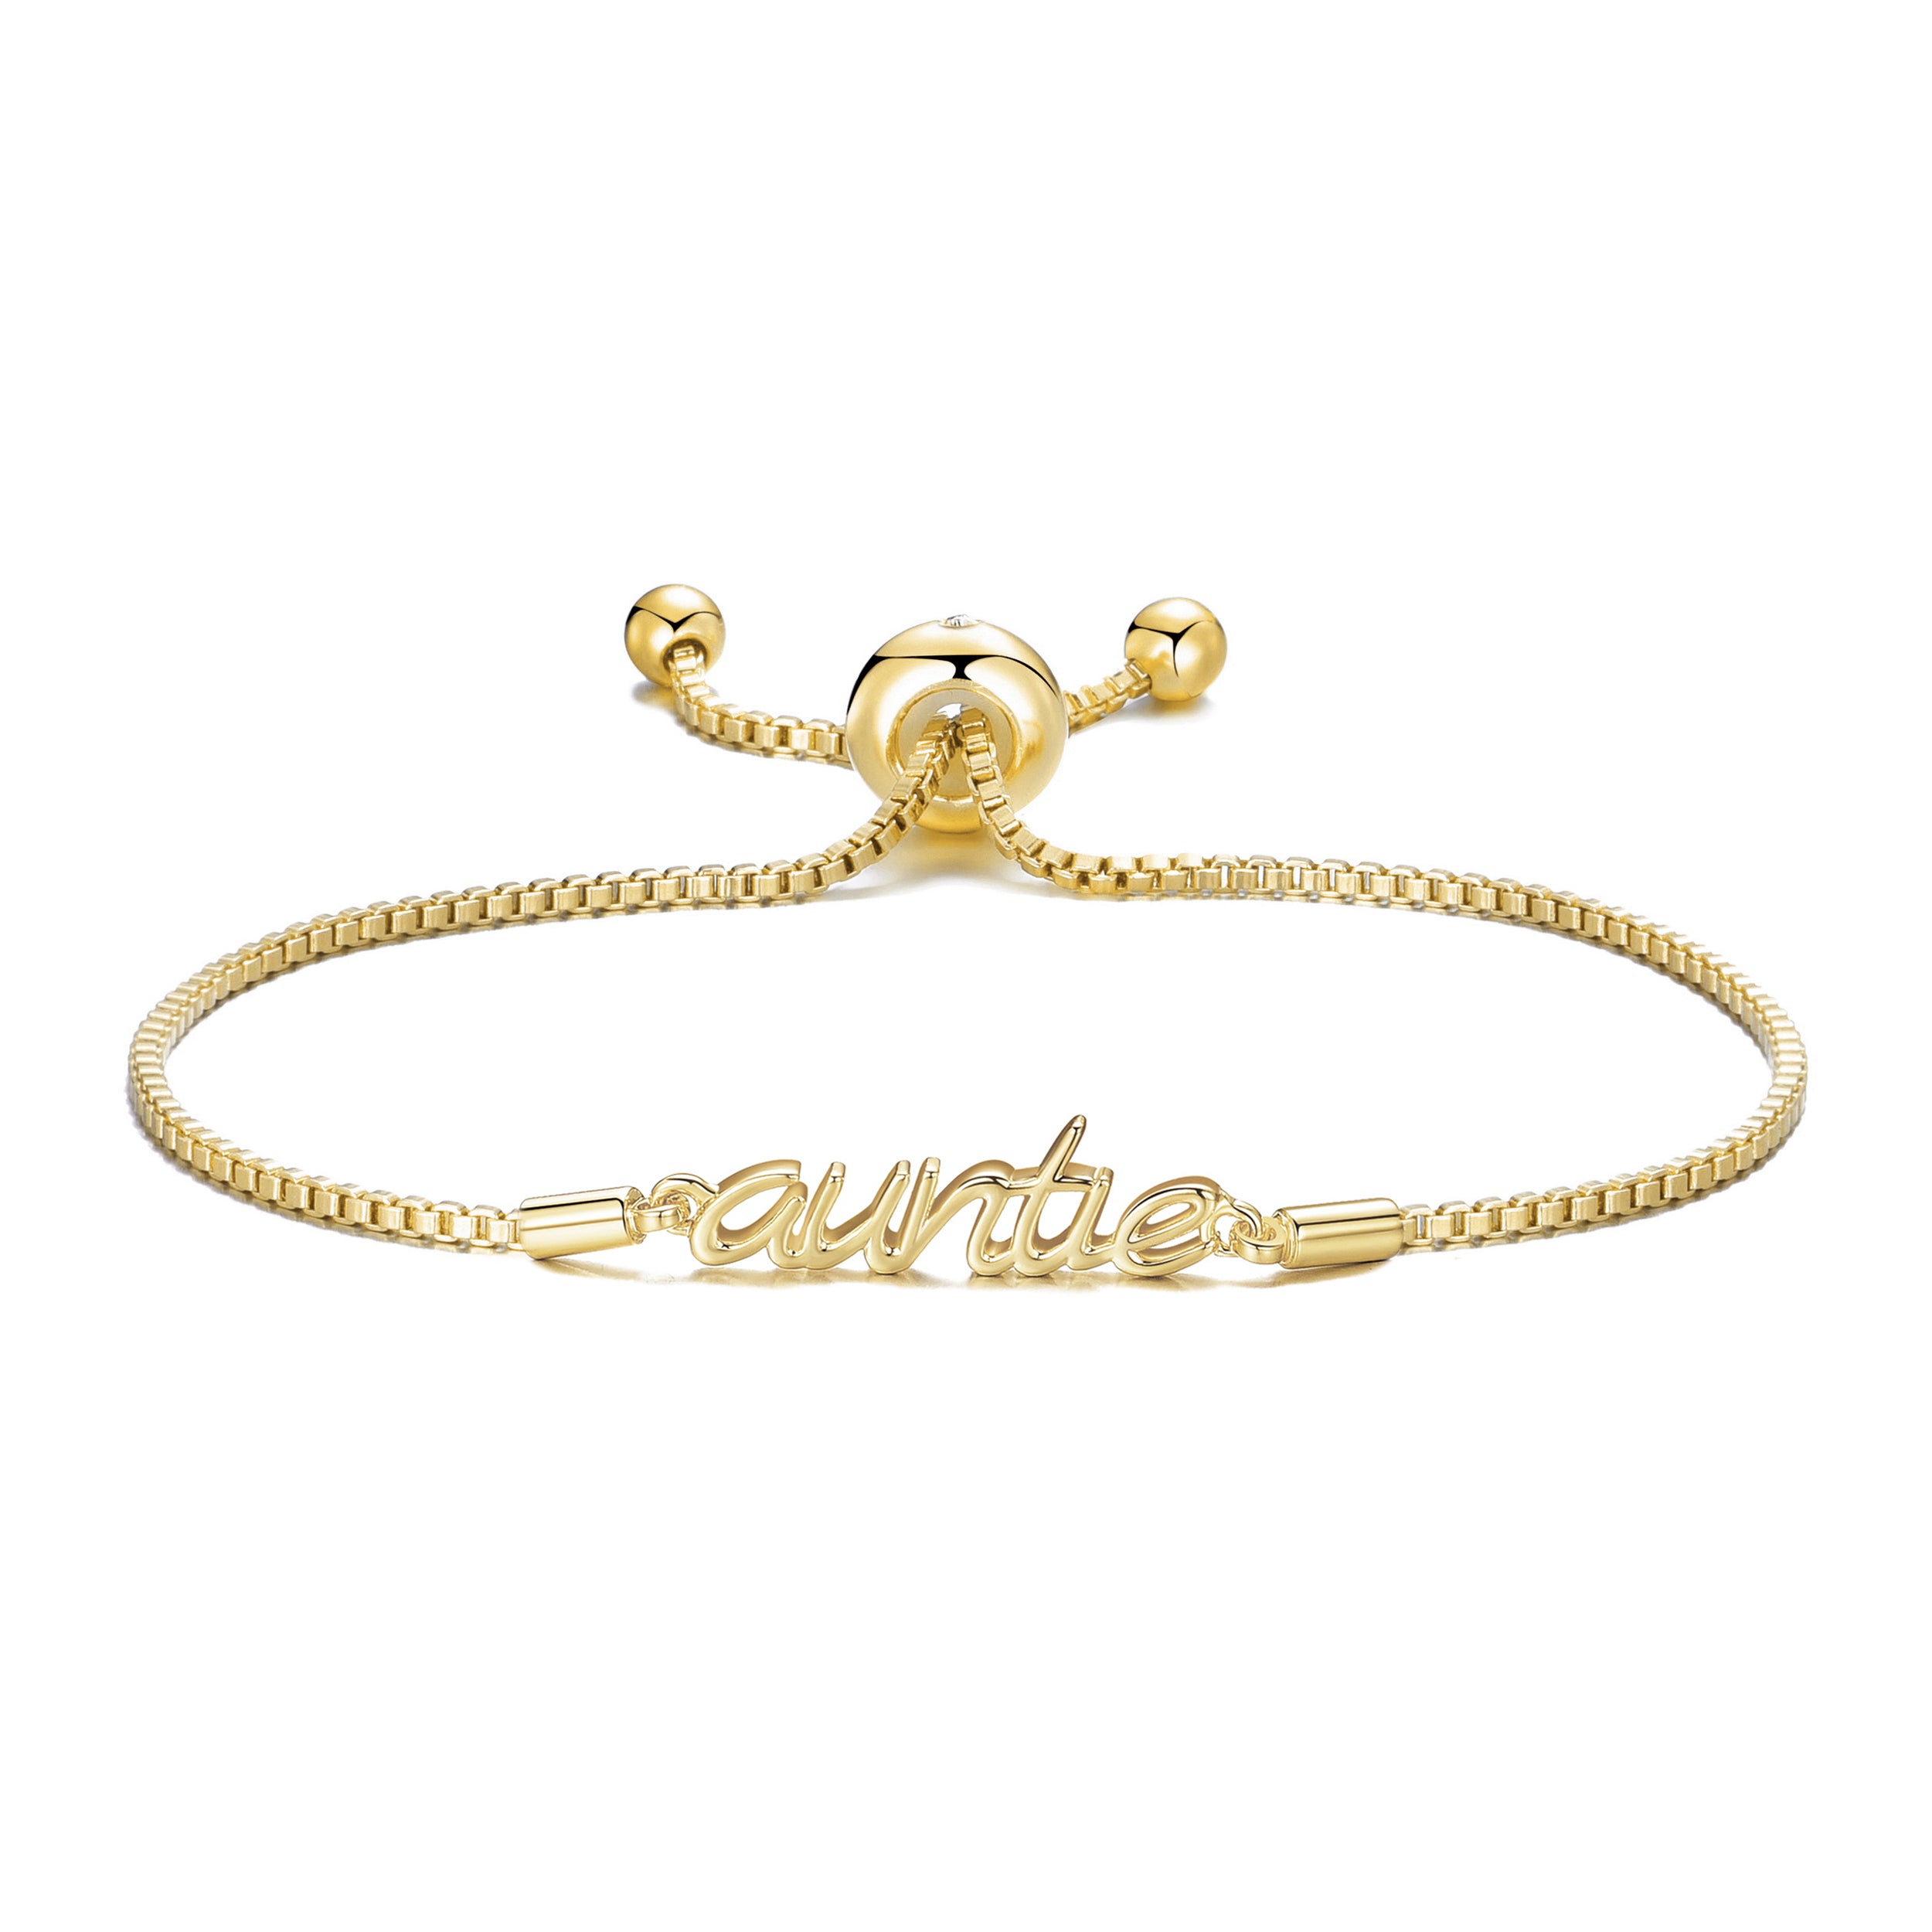 Gold Plated Auntie Bracelet Created with Zircondia® Crystals by Philip Jones Jewellery